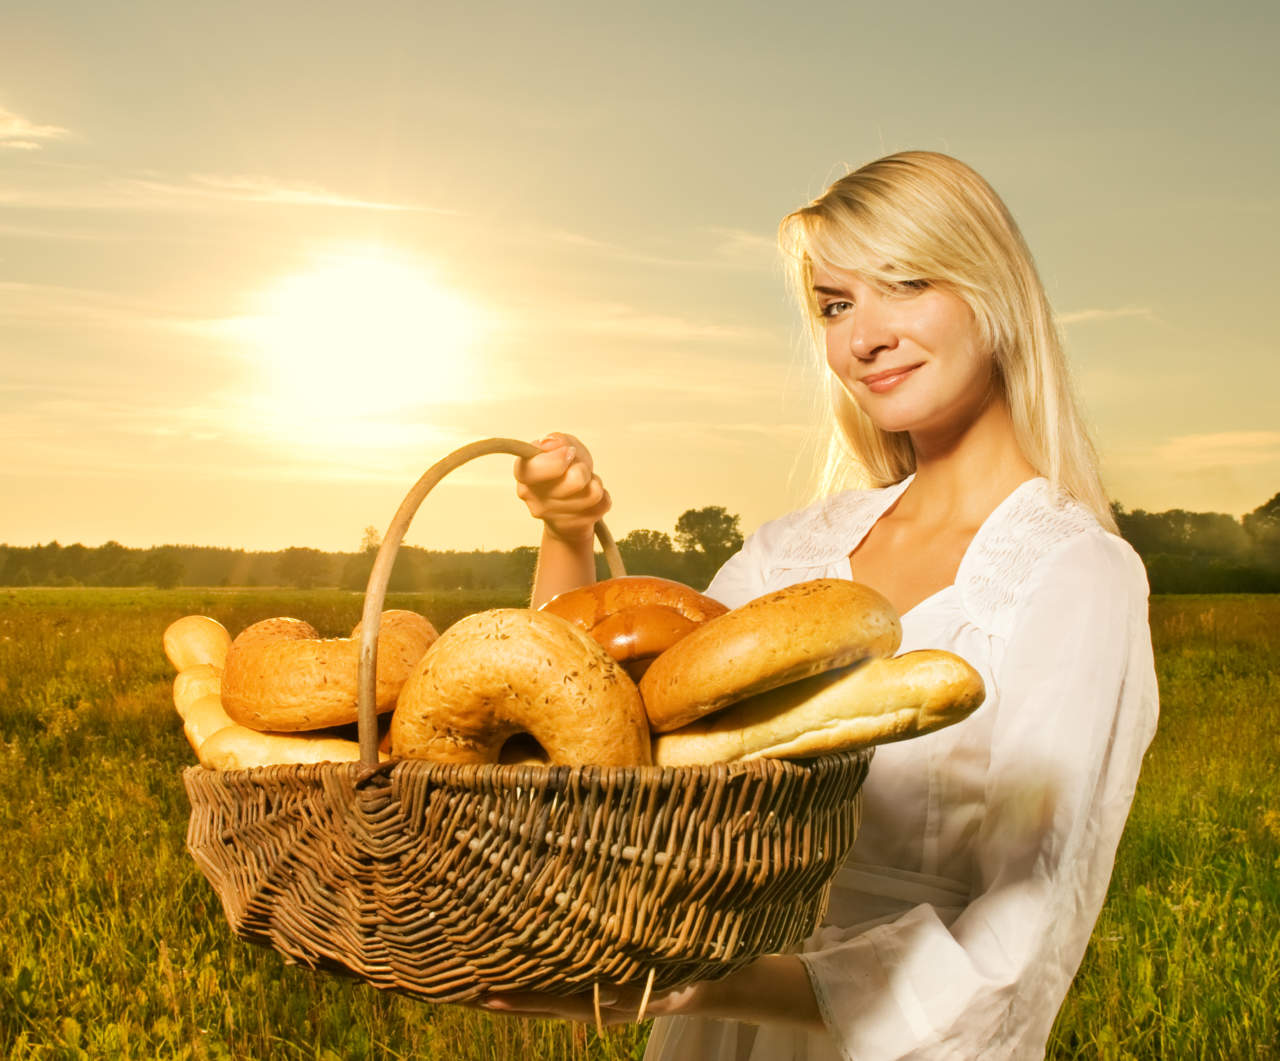 Баба булочка. Корзинка для хлеба. Девушка с хлебом. Булочки девушек. Женщина с корзинкой хлеба.